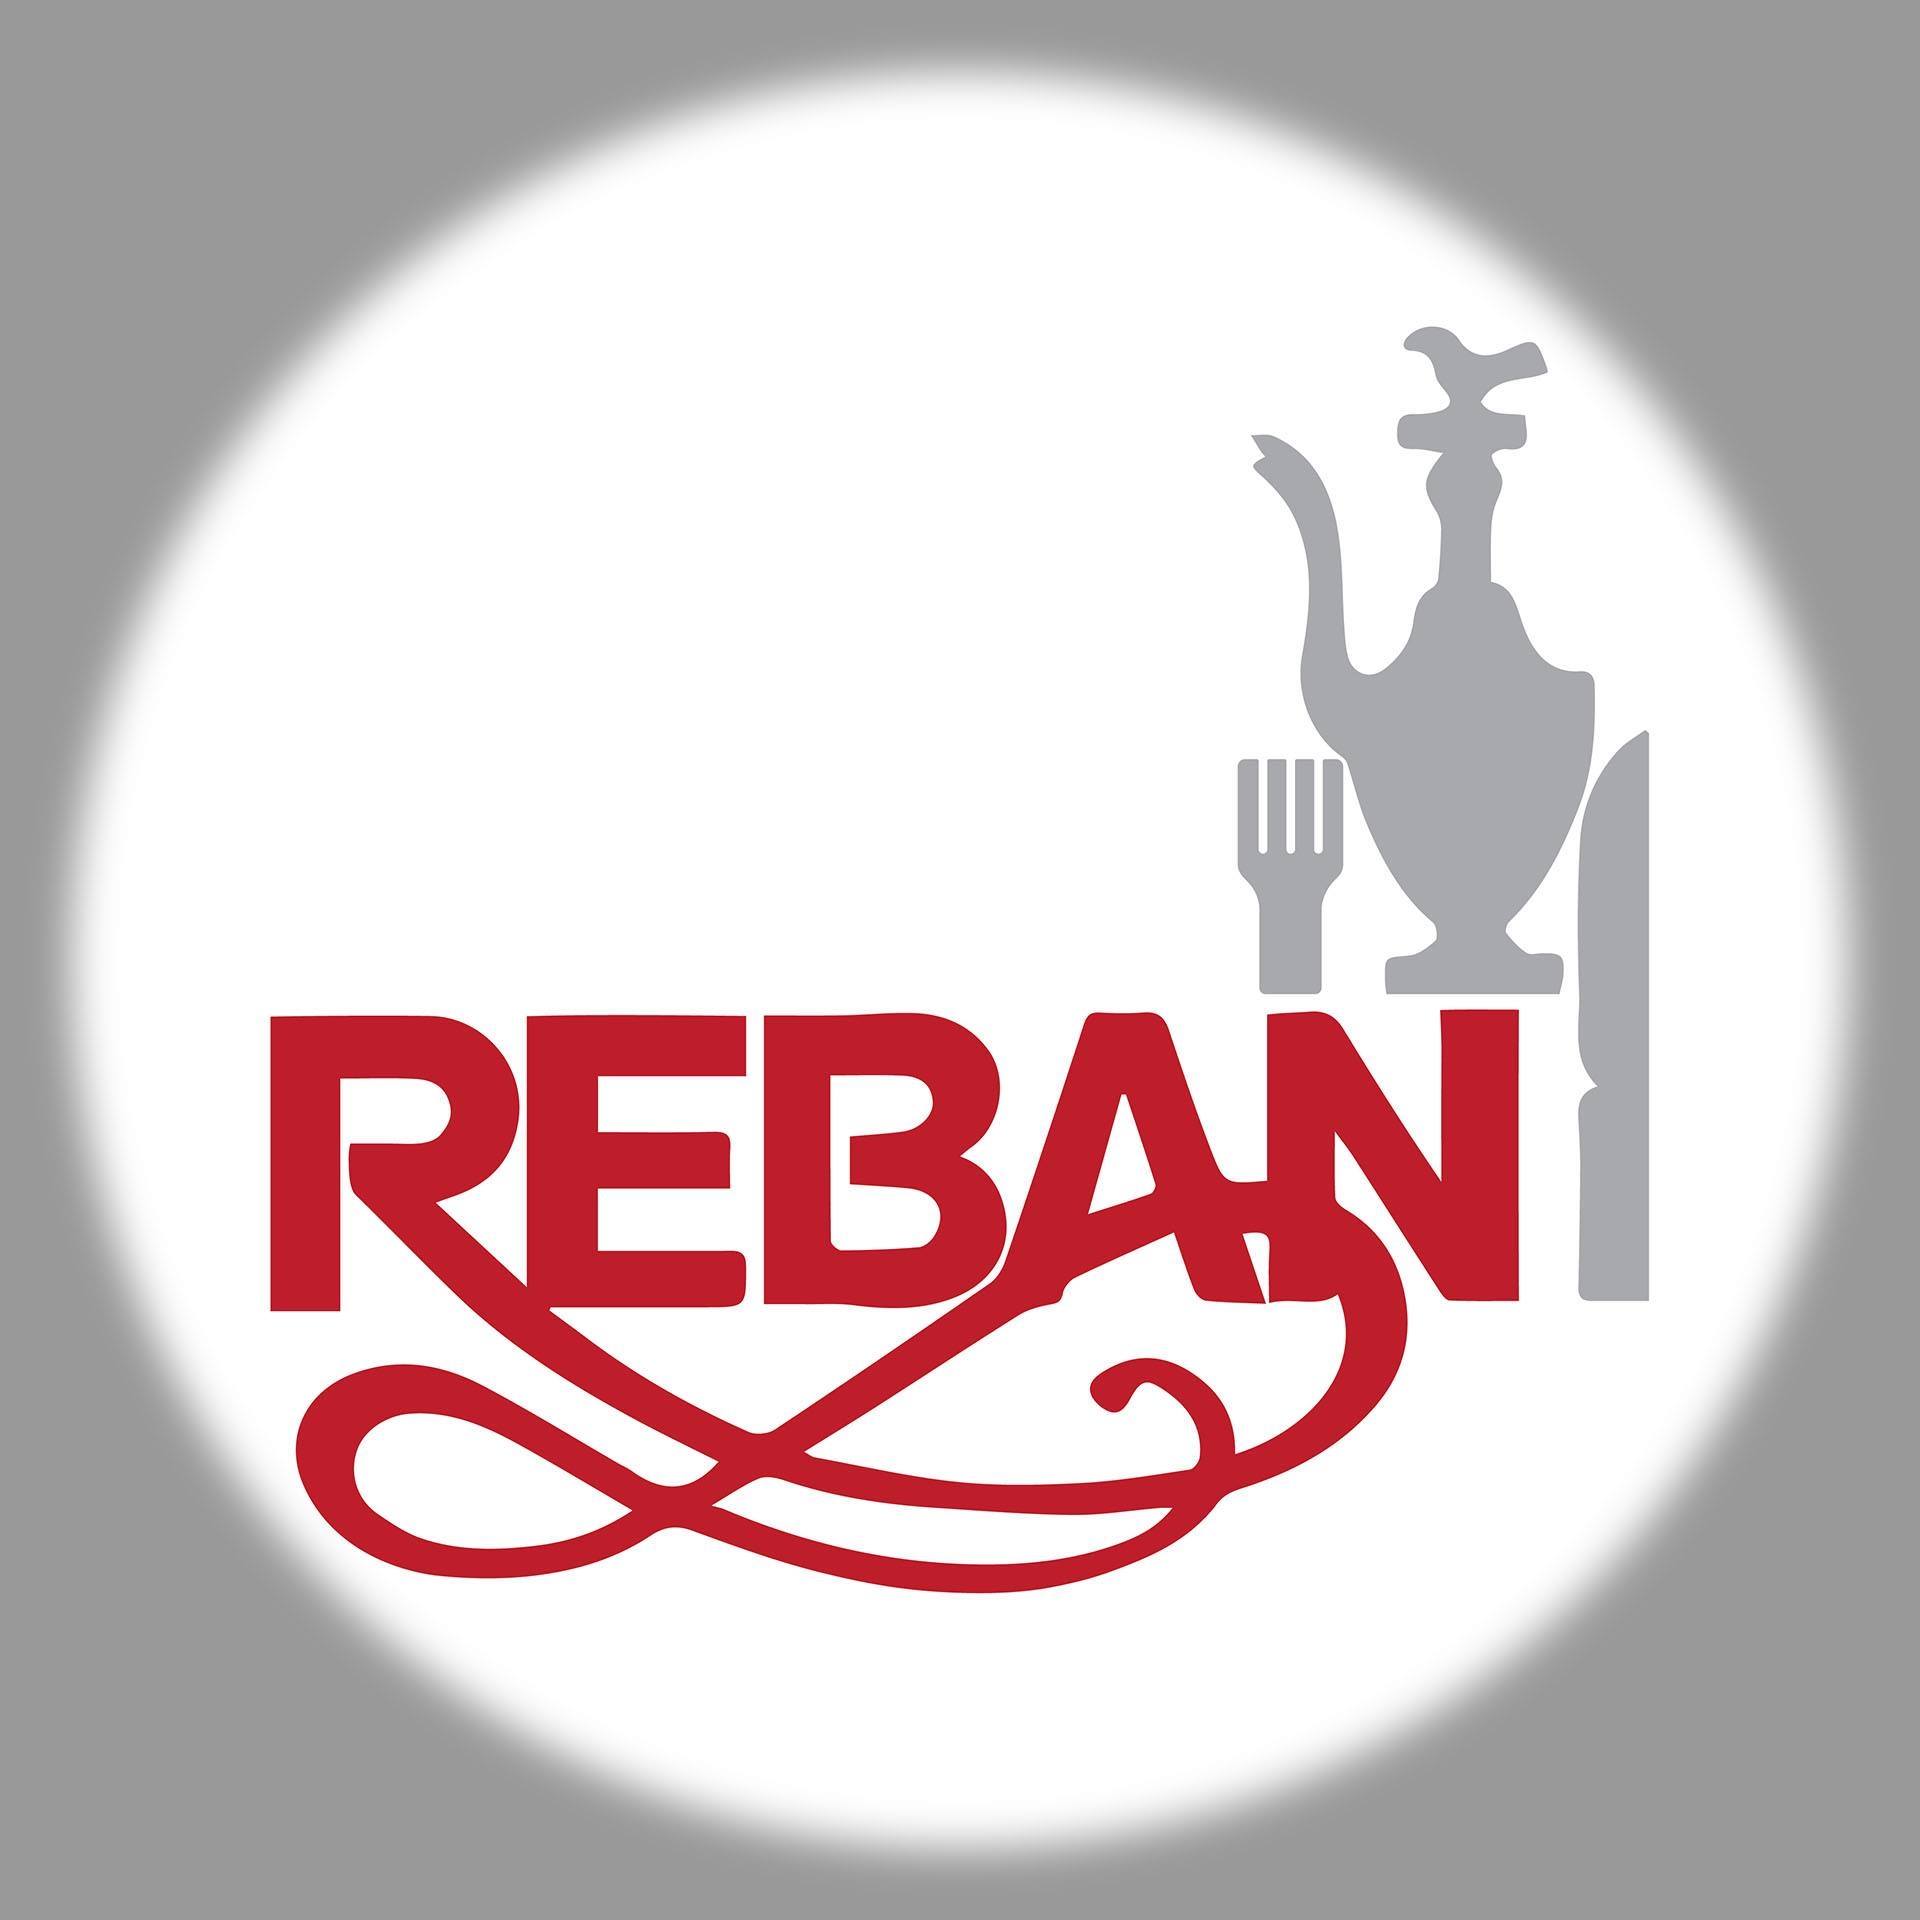 REBAN organizing 24th Pokhara Street Festival from Dec 28